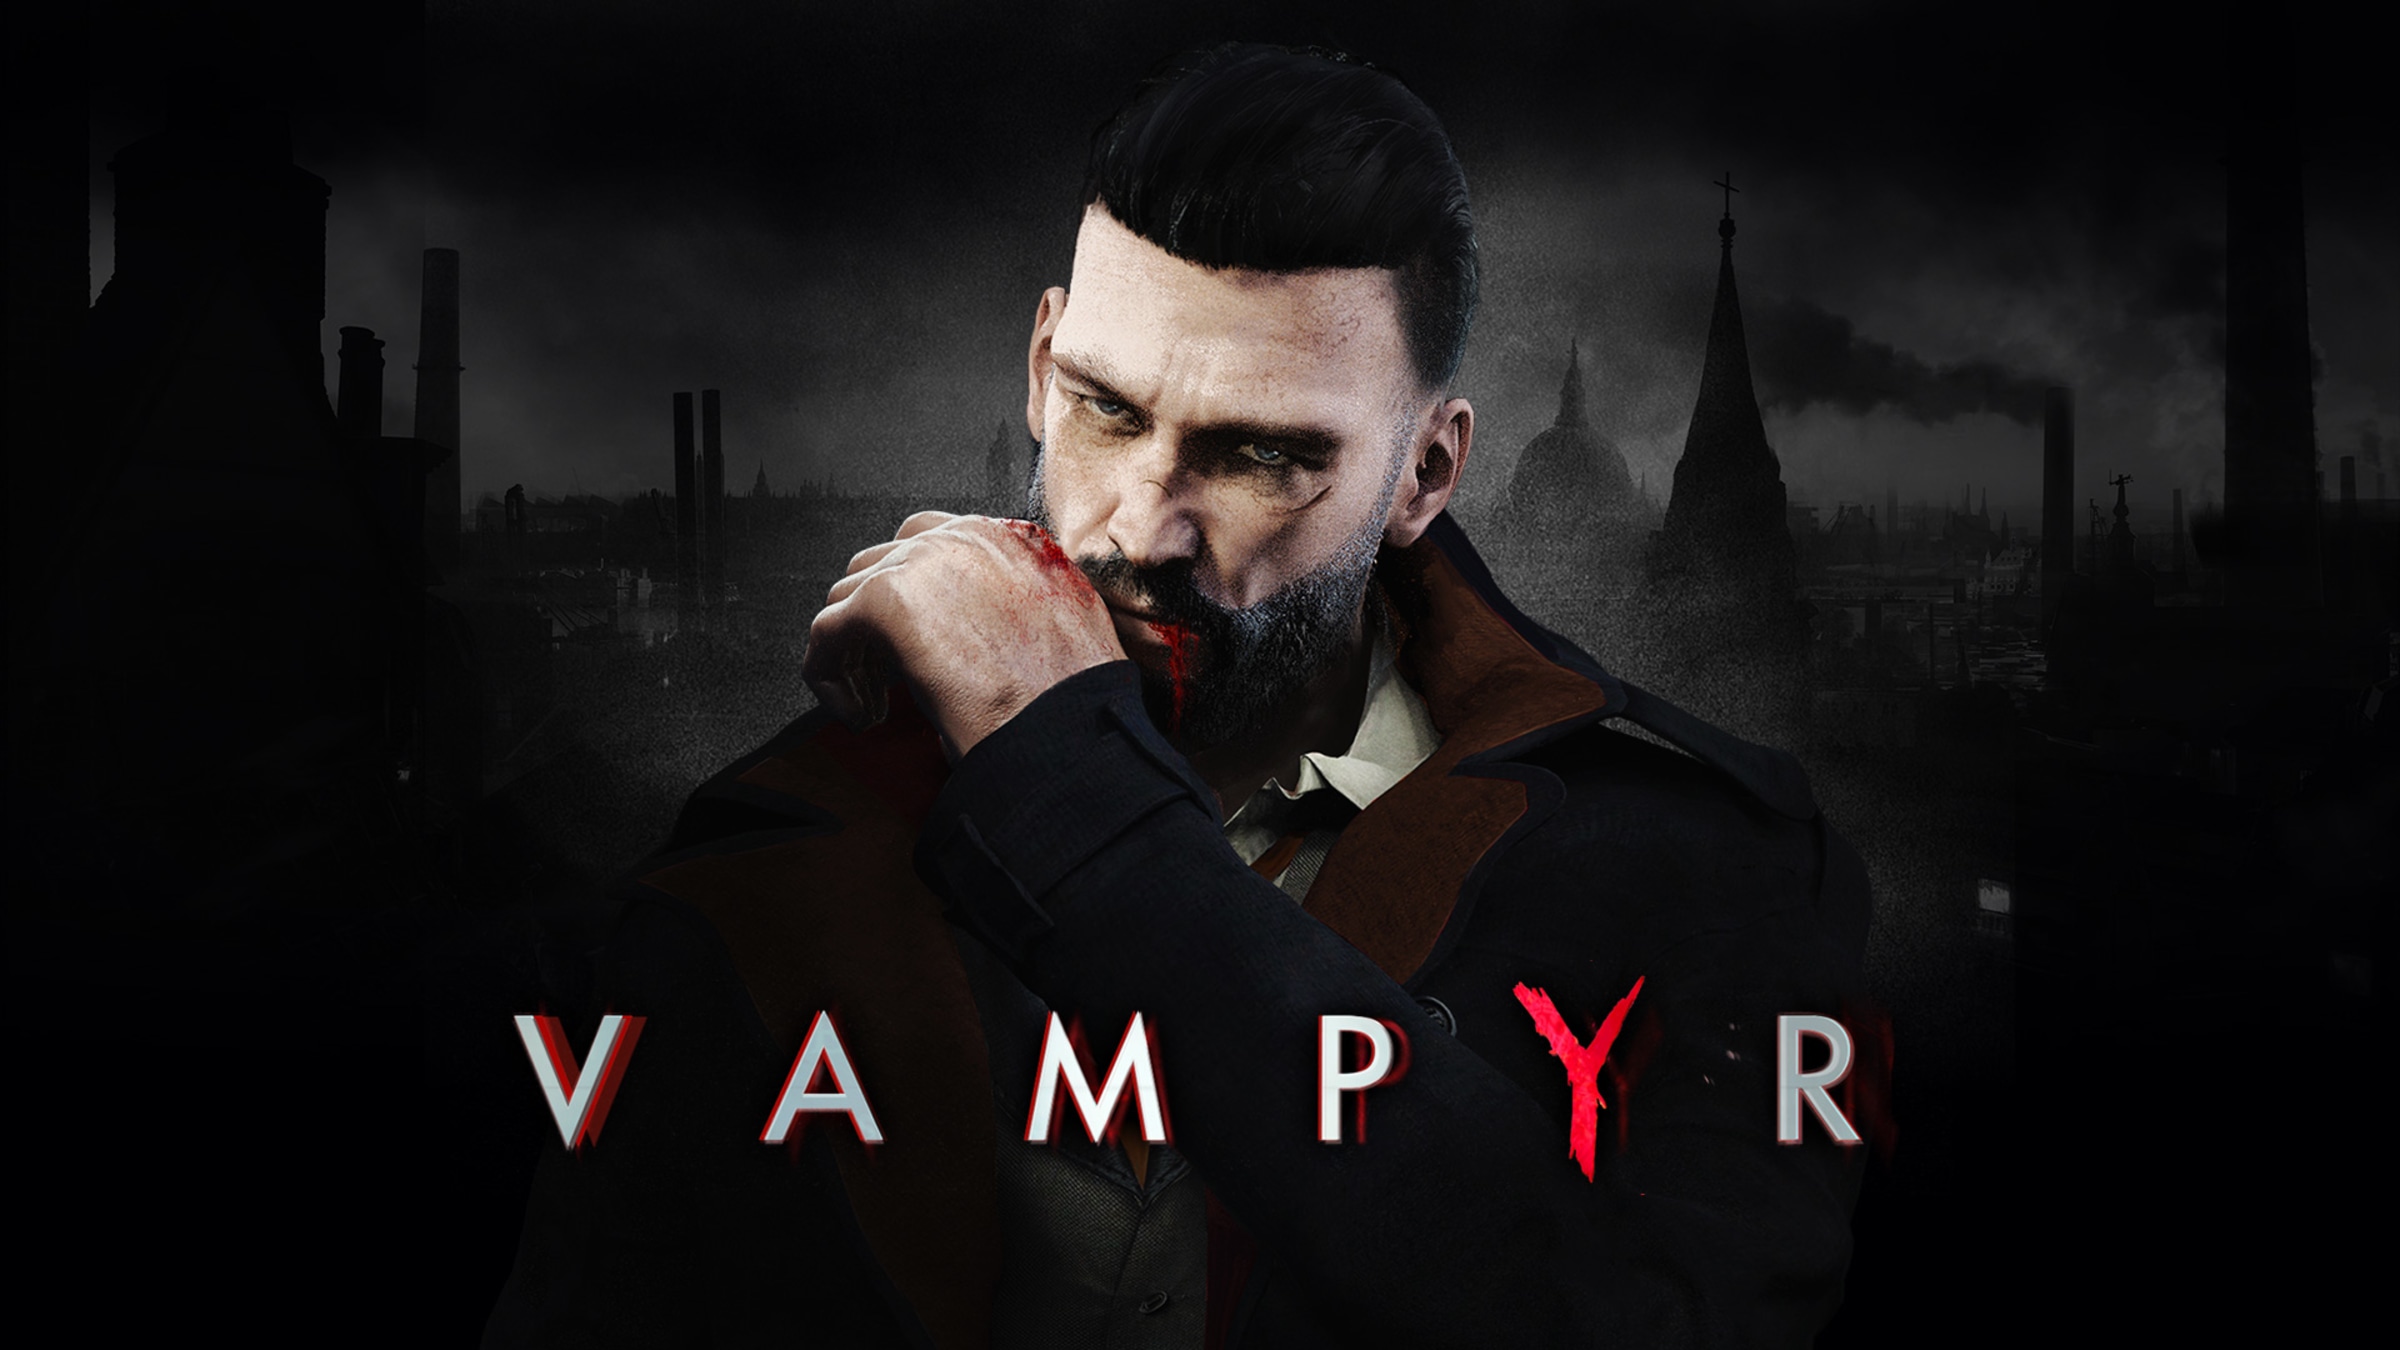 vampyr game save file location